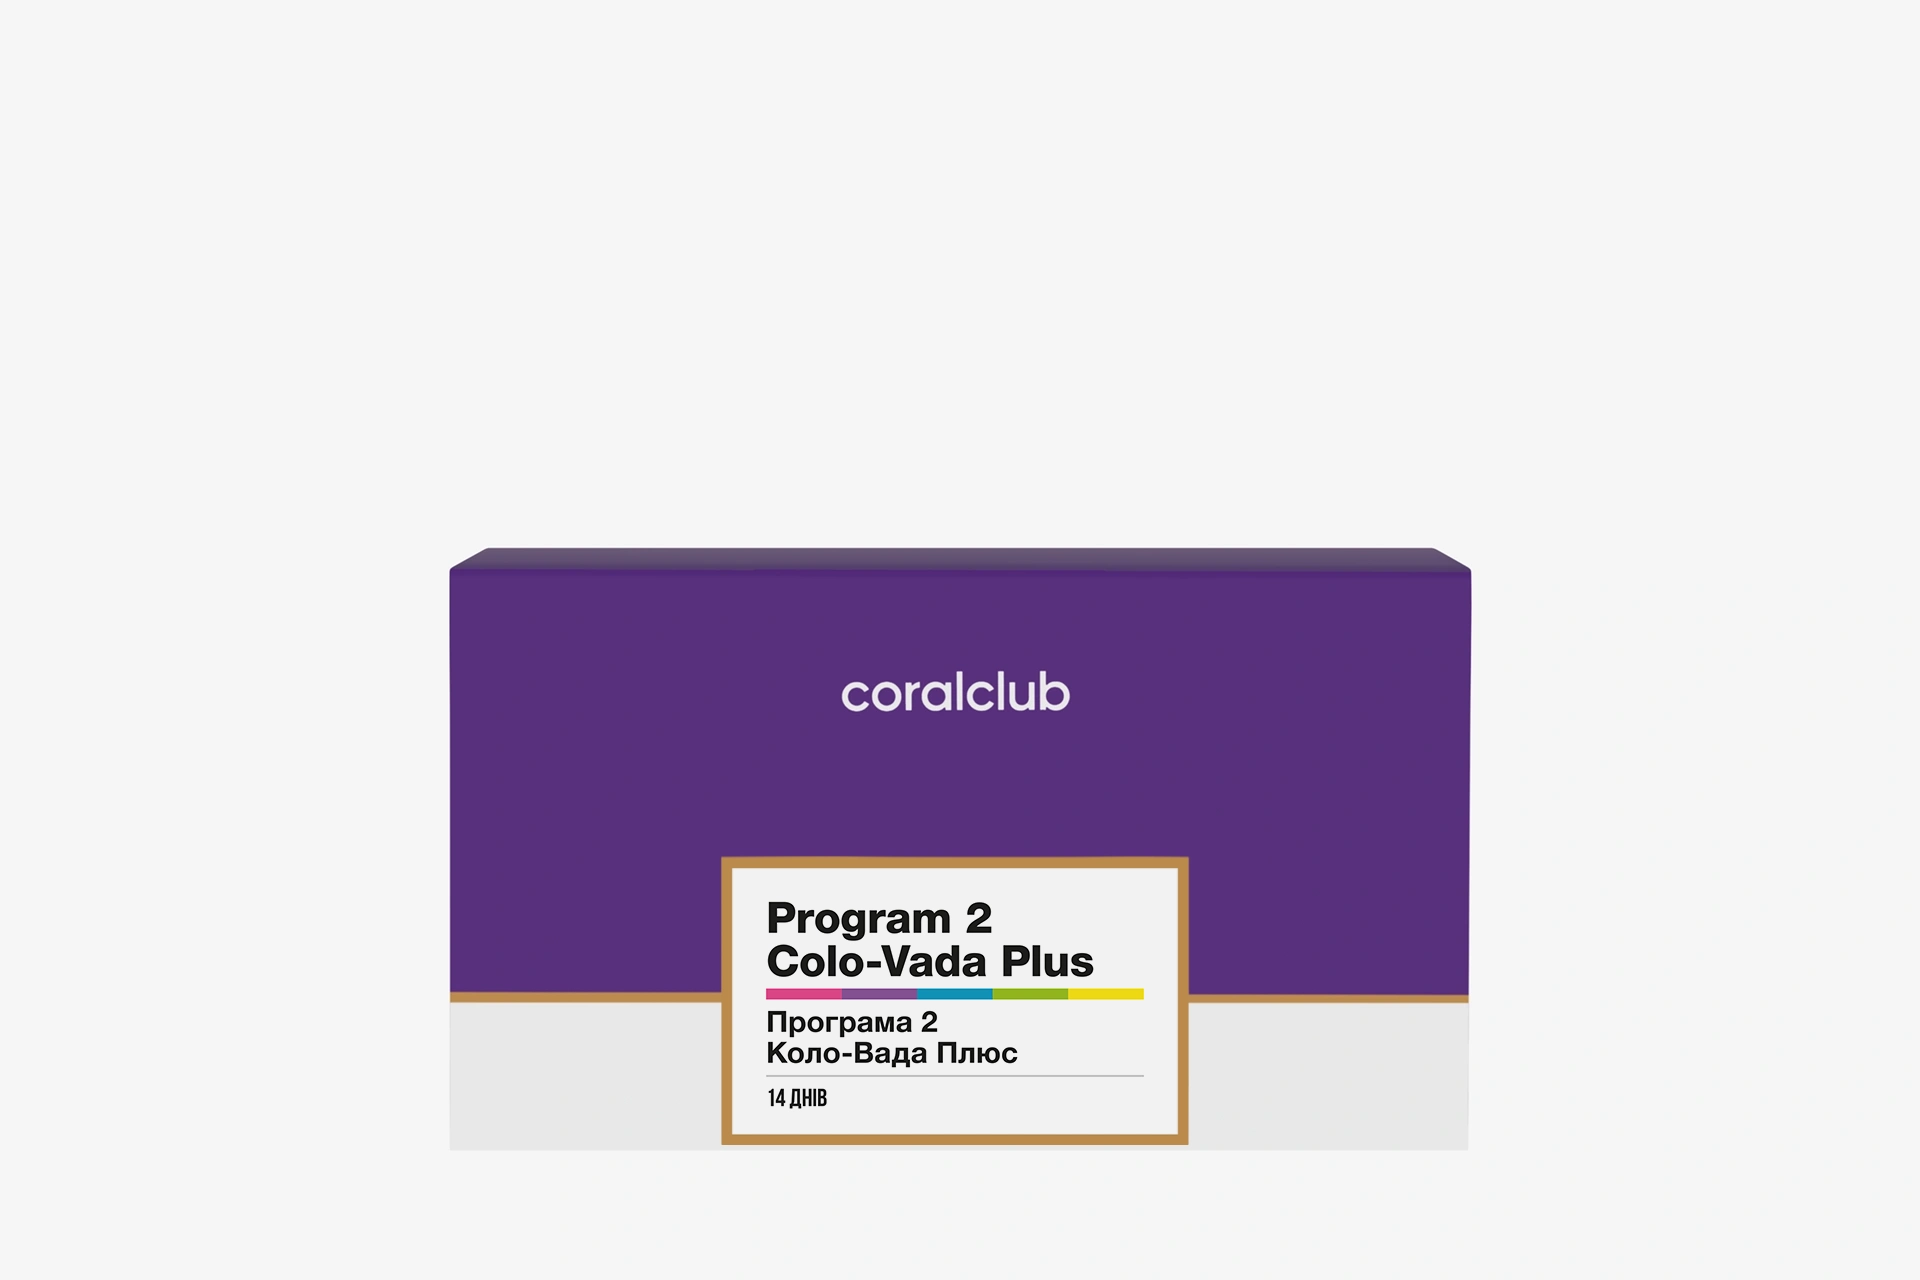 Set "Programm 2 Colo-Vada Plus" pack